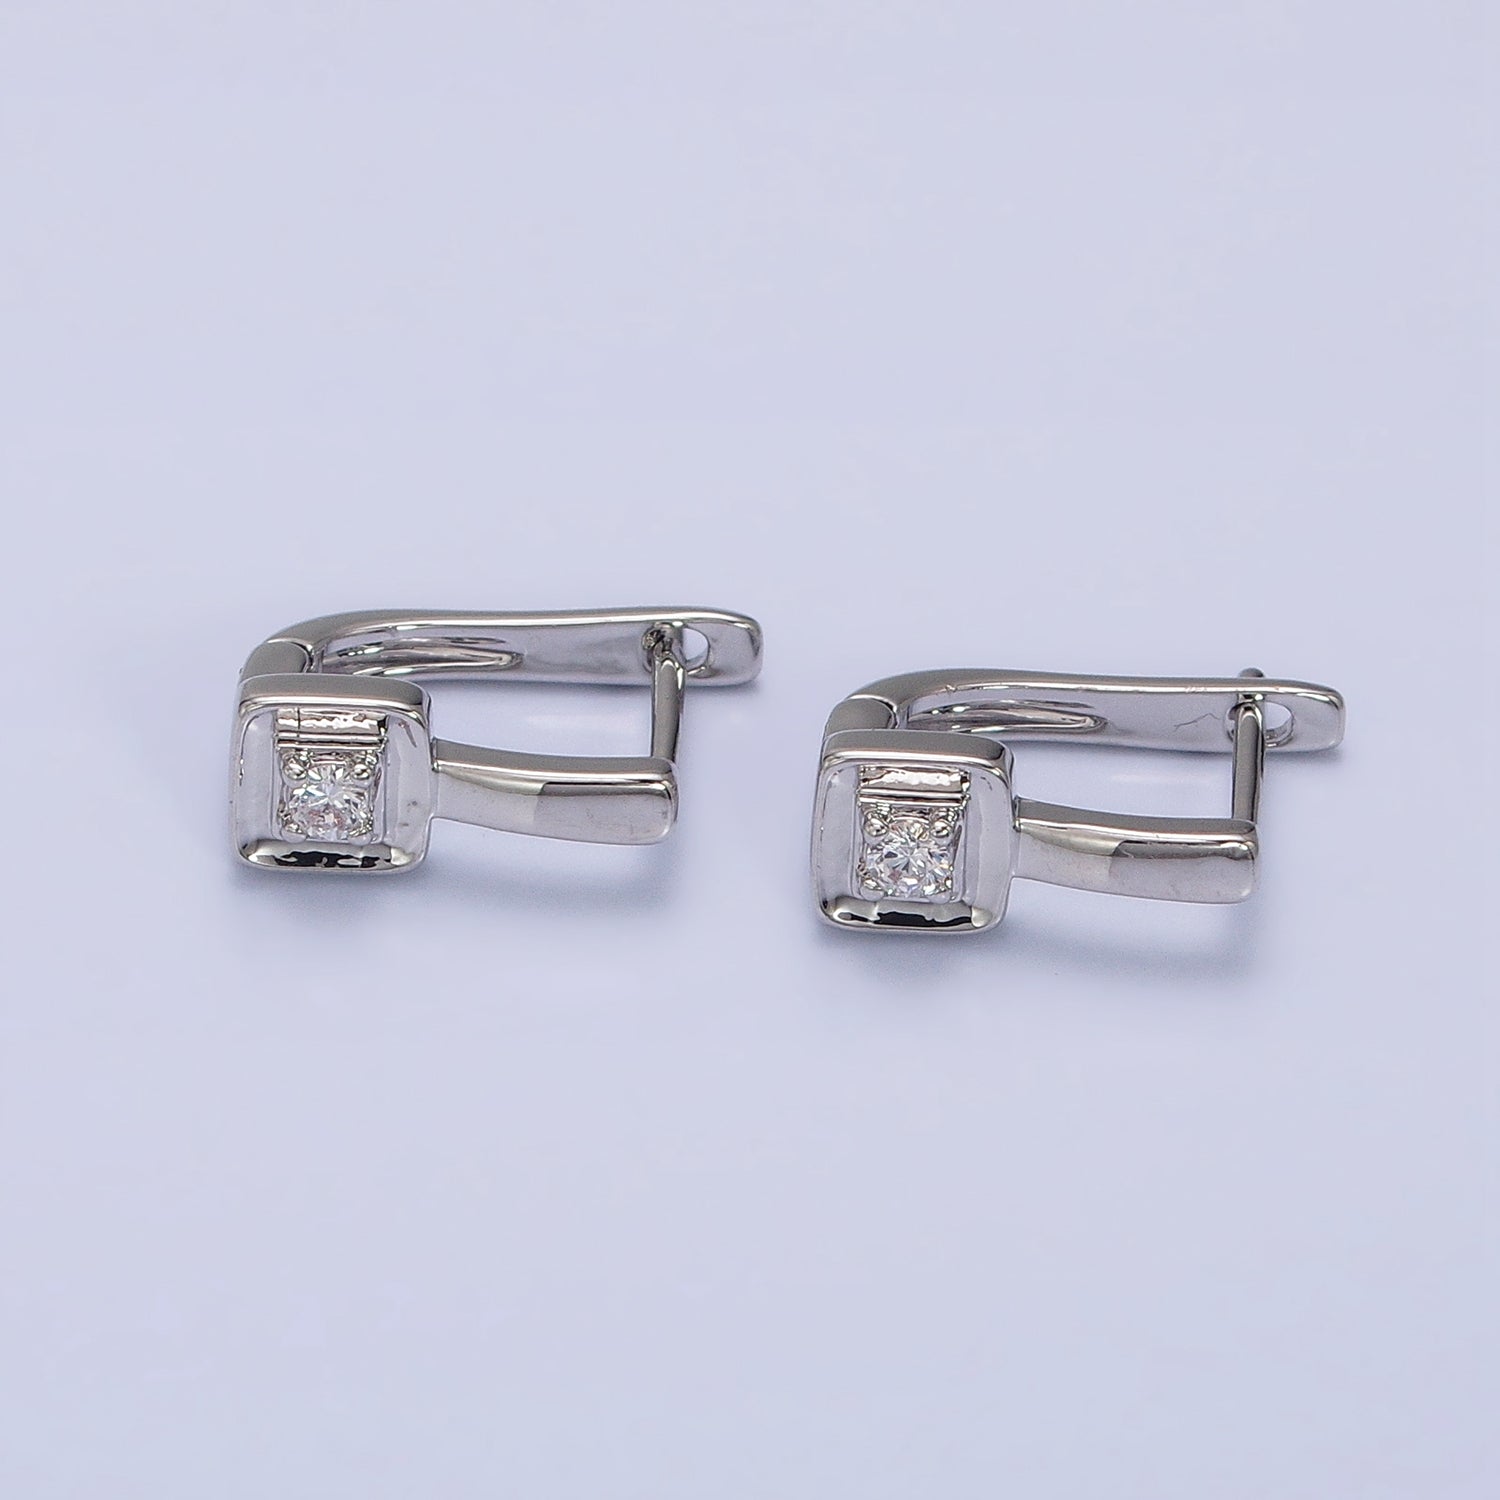 Gold, Silver 16mm U-Shaped Oblong Square CZ Geometric English Lock Earrings | AB778 AB1550